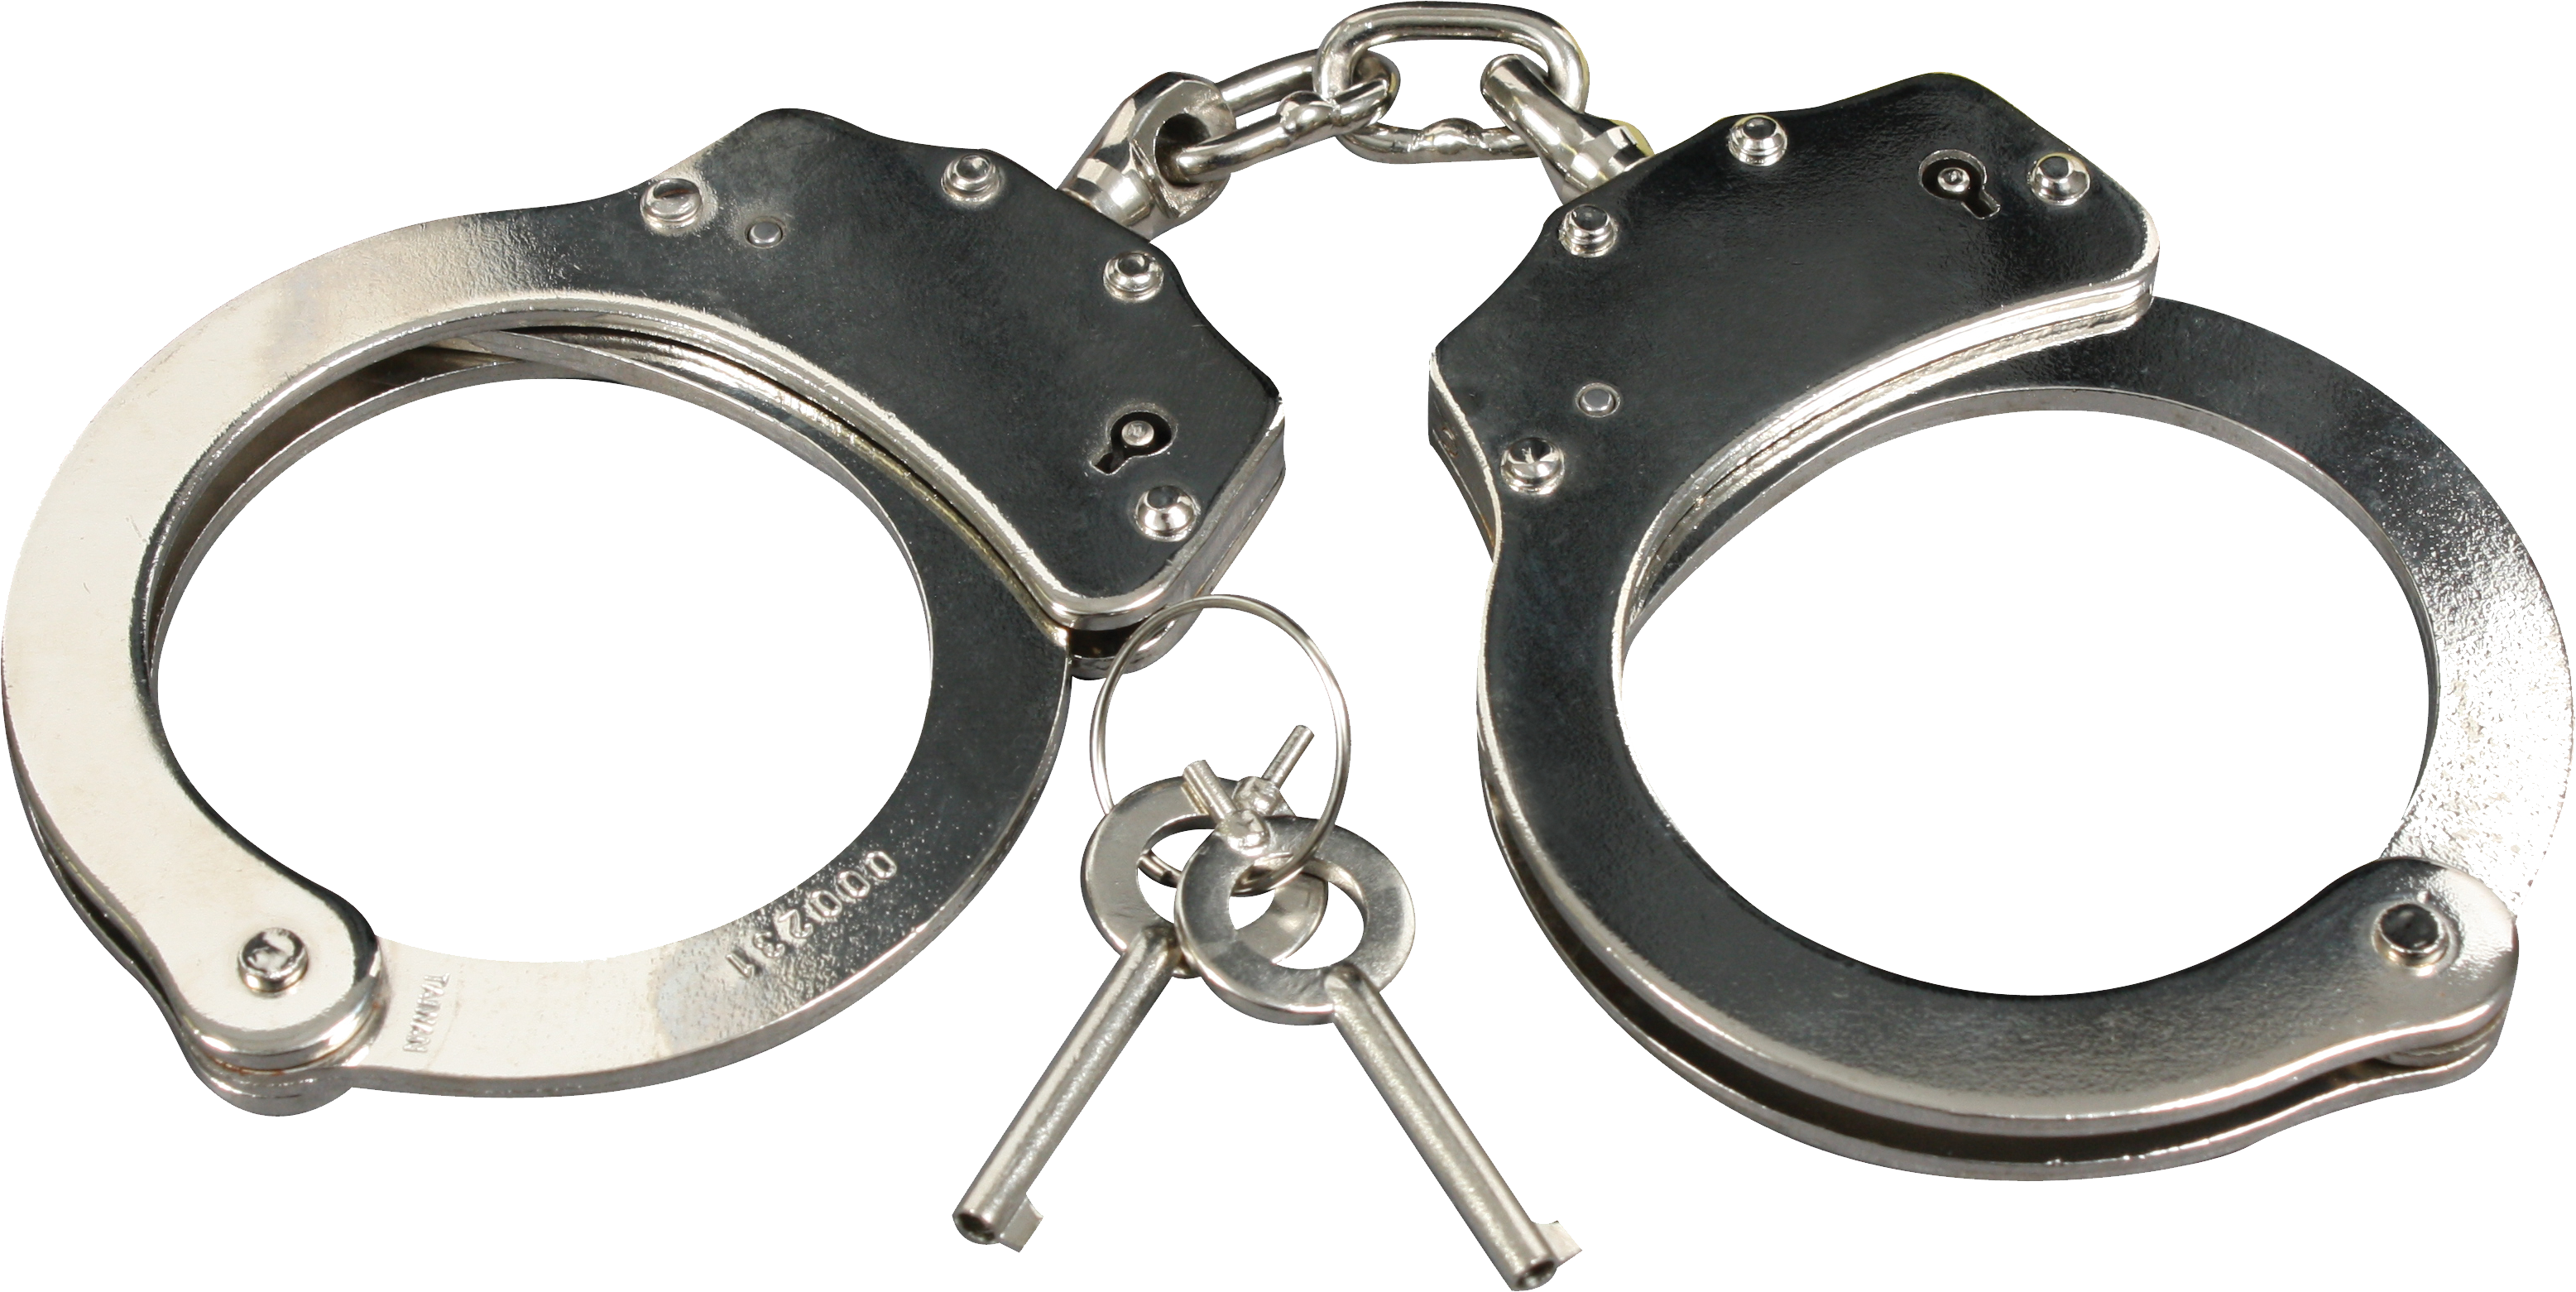 Png . Handcuffs clipart custody